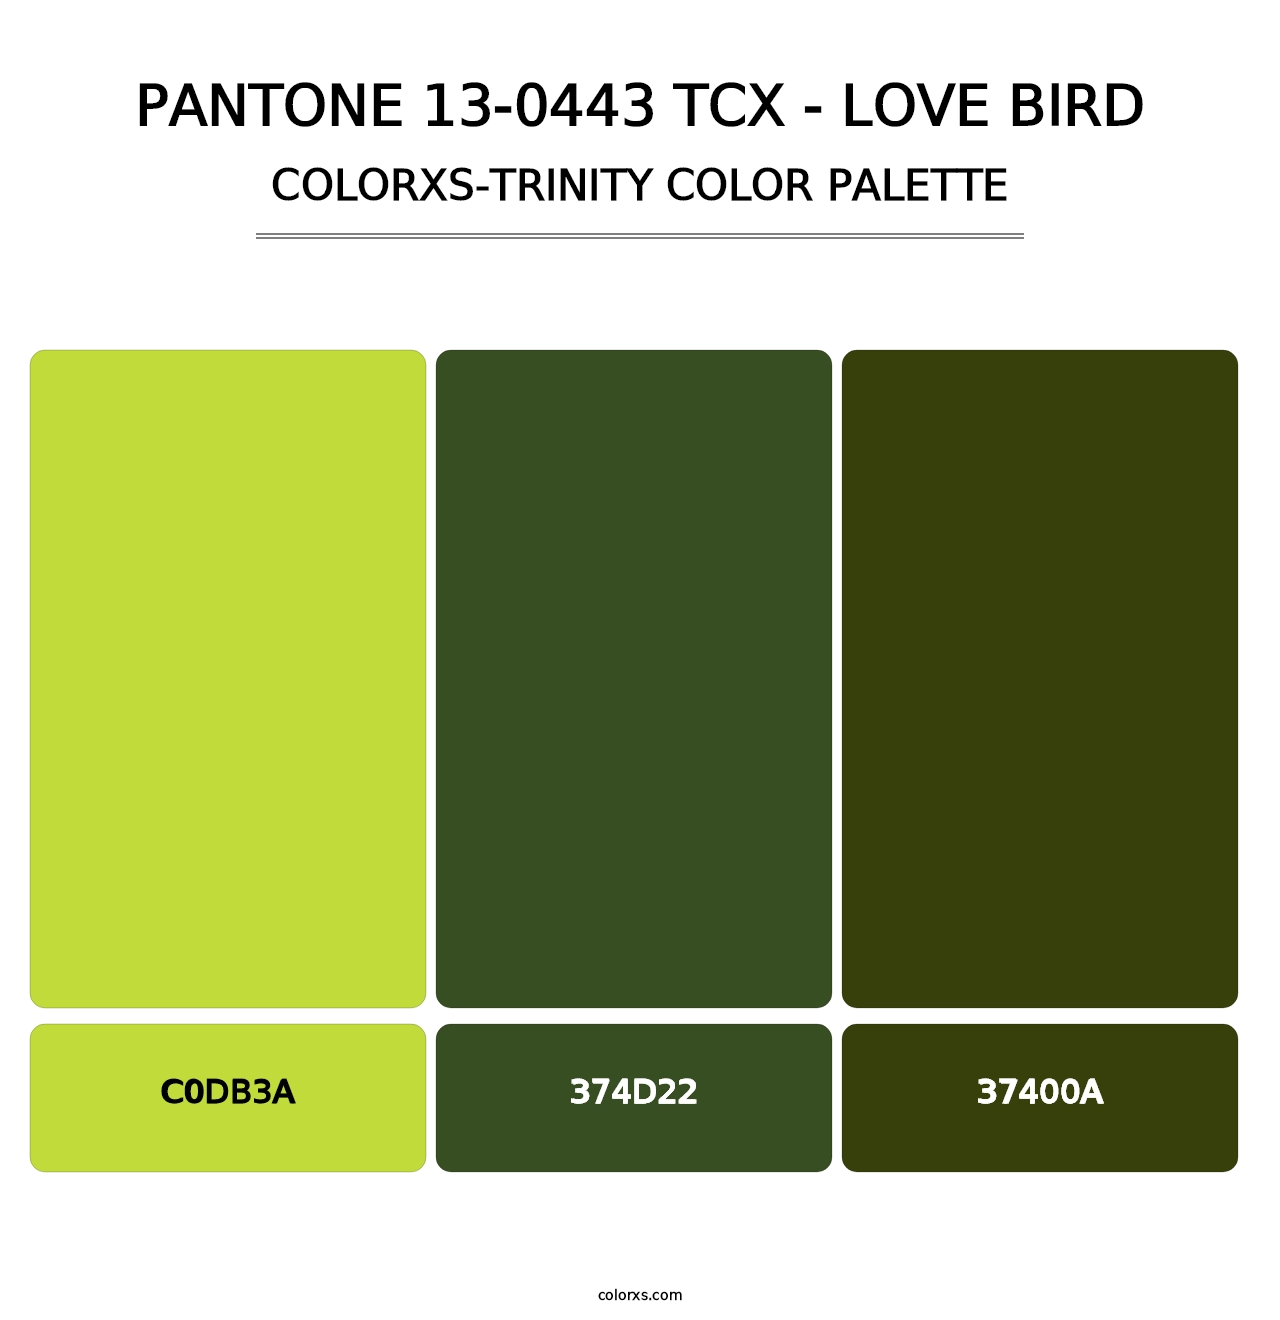 PANTONE 13-0443 TCX - Love Bird - Colorxs Trinity Palette